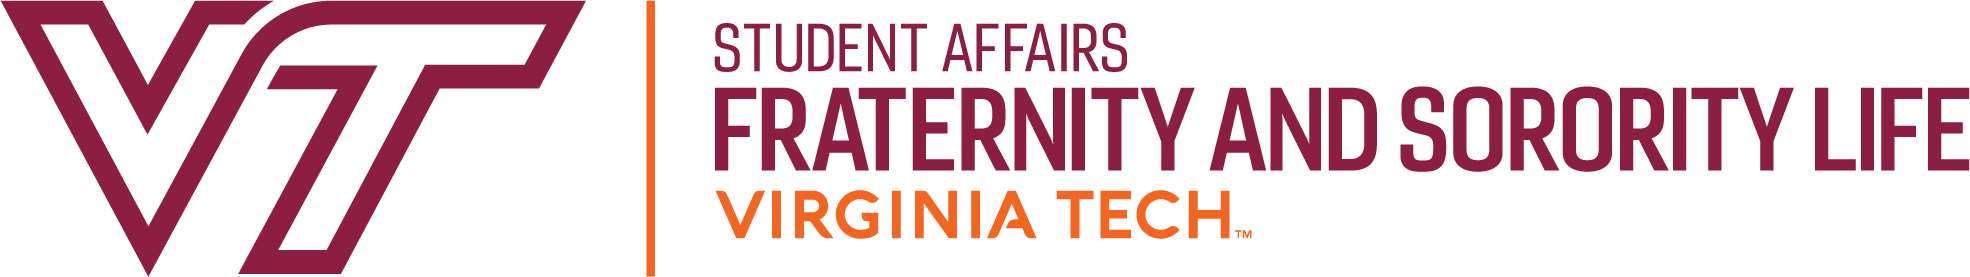 Virginia Tech Fraternity and Sorority Life logo